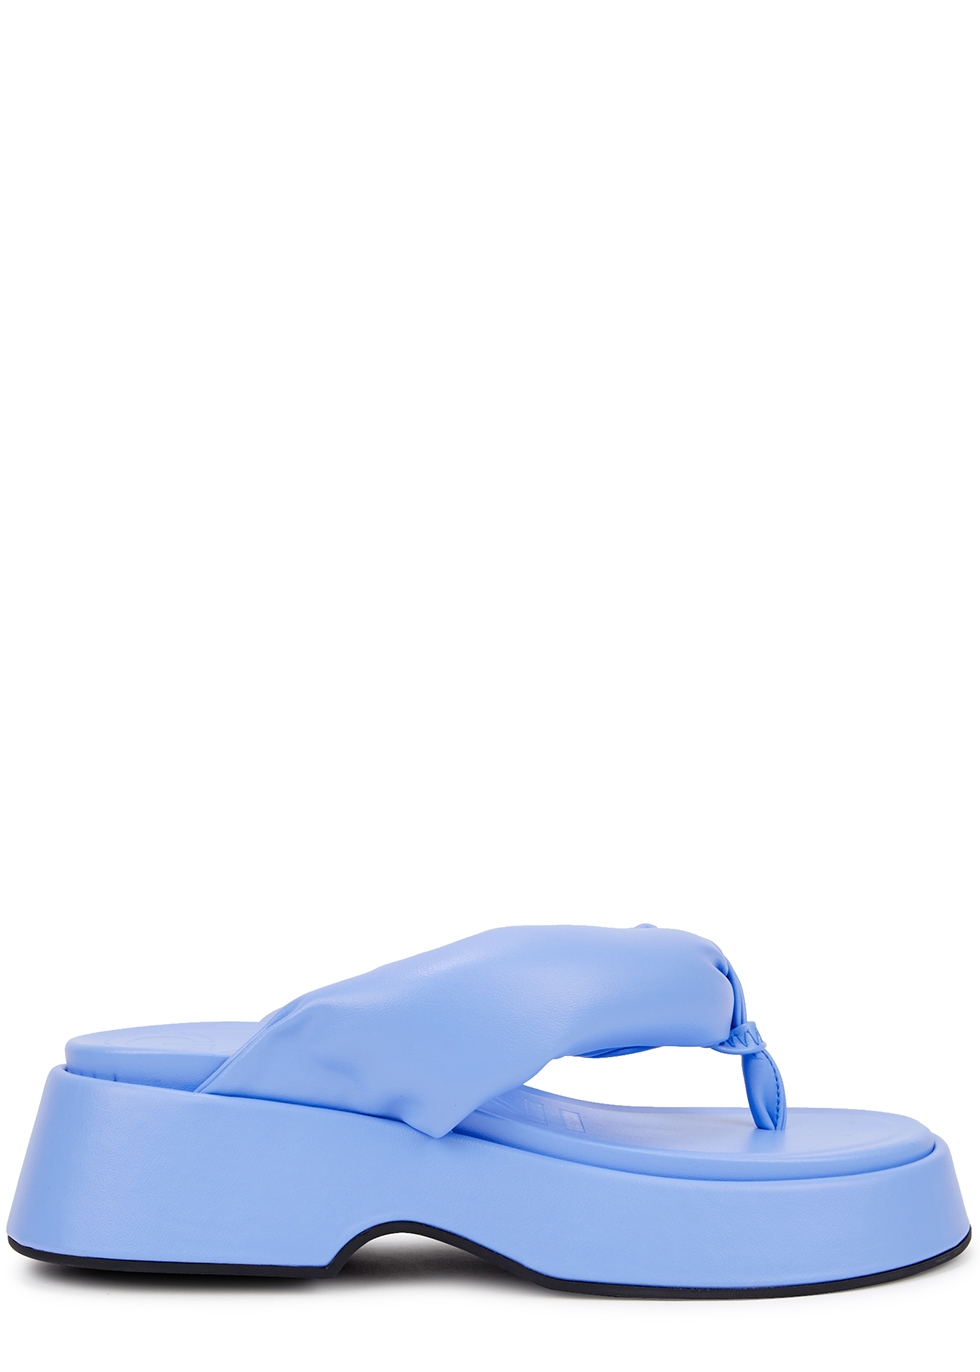 Retro blue vegan leather flatform sandals